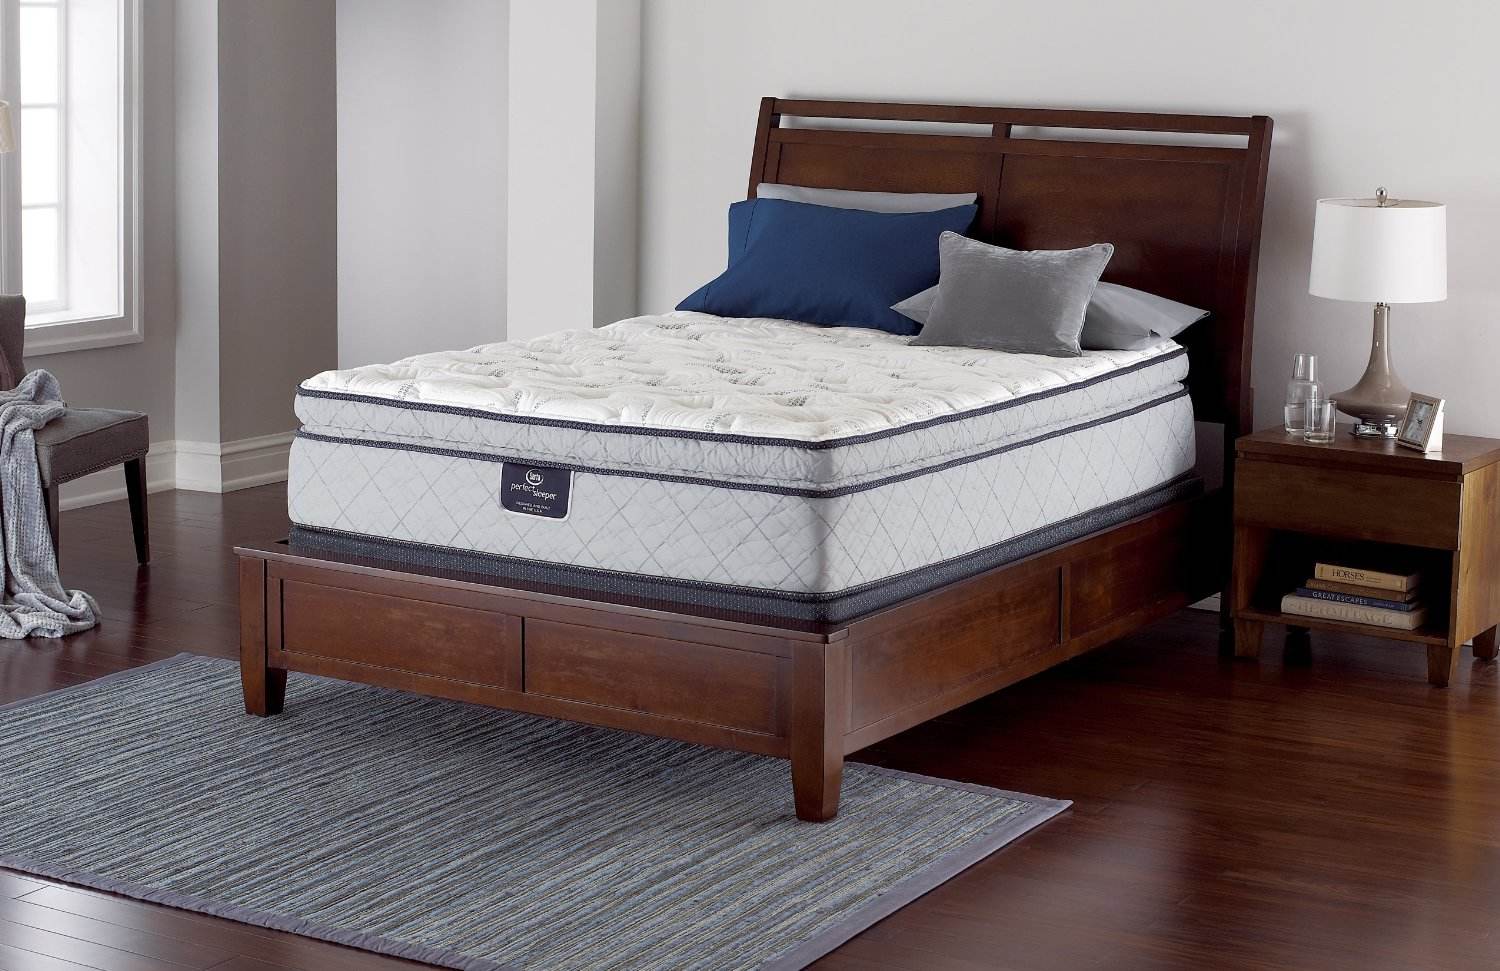 types of serta perfect sleeper mattresses